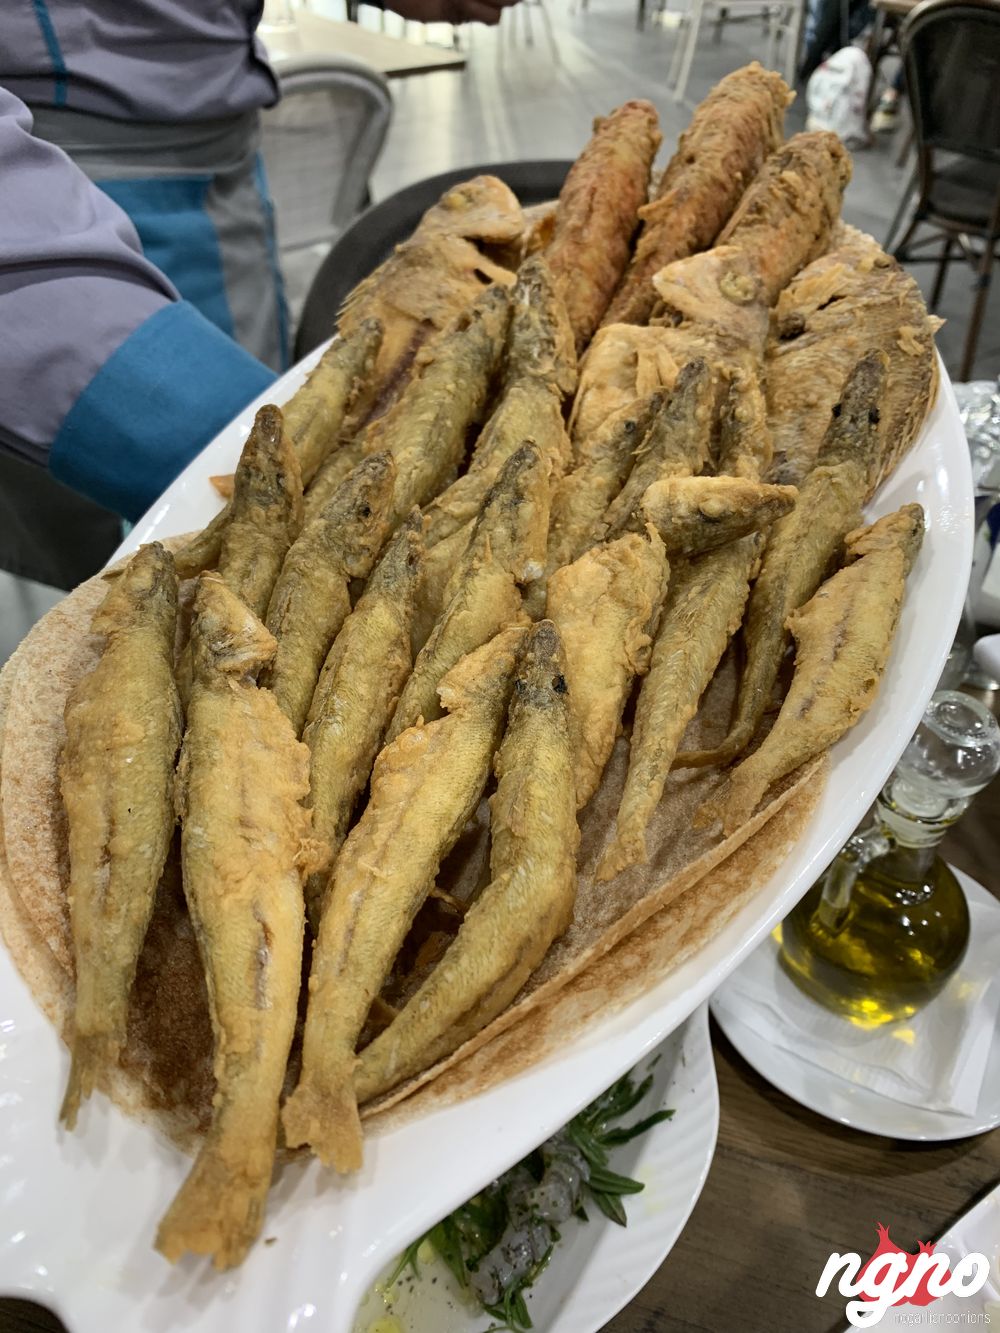 kesrwani-seafood-fish-antelias-nogarlicnoonions-132019-06-06-08-38-49